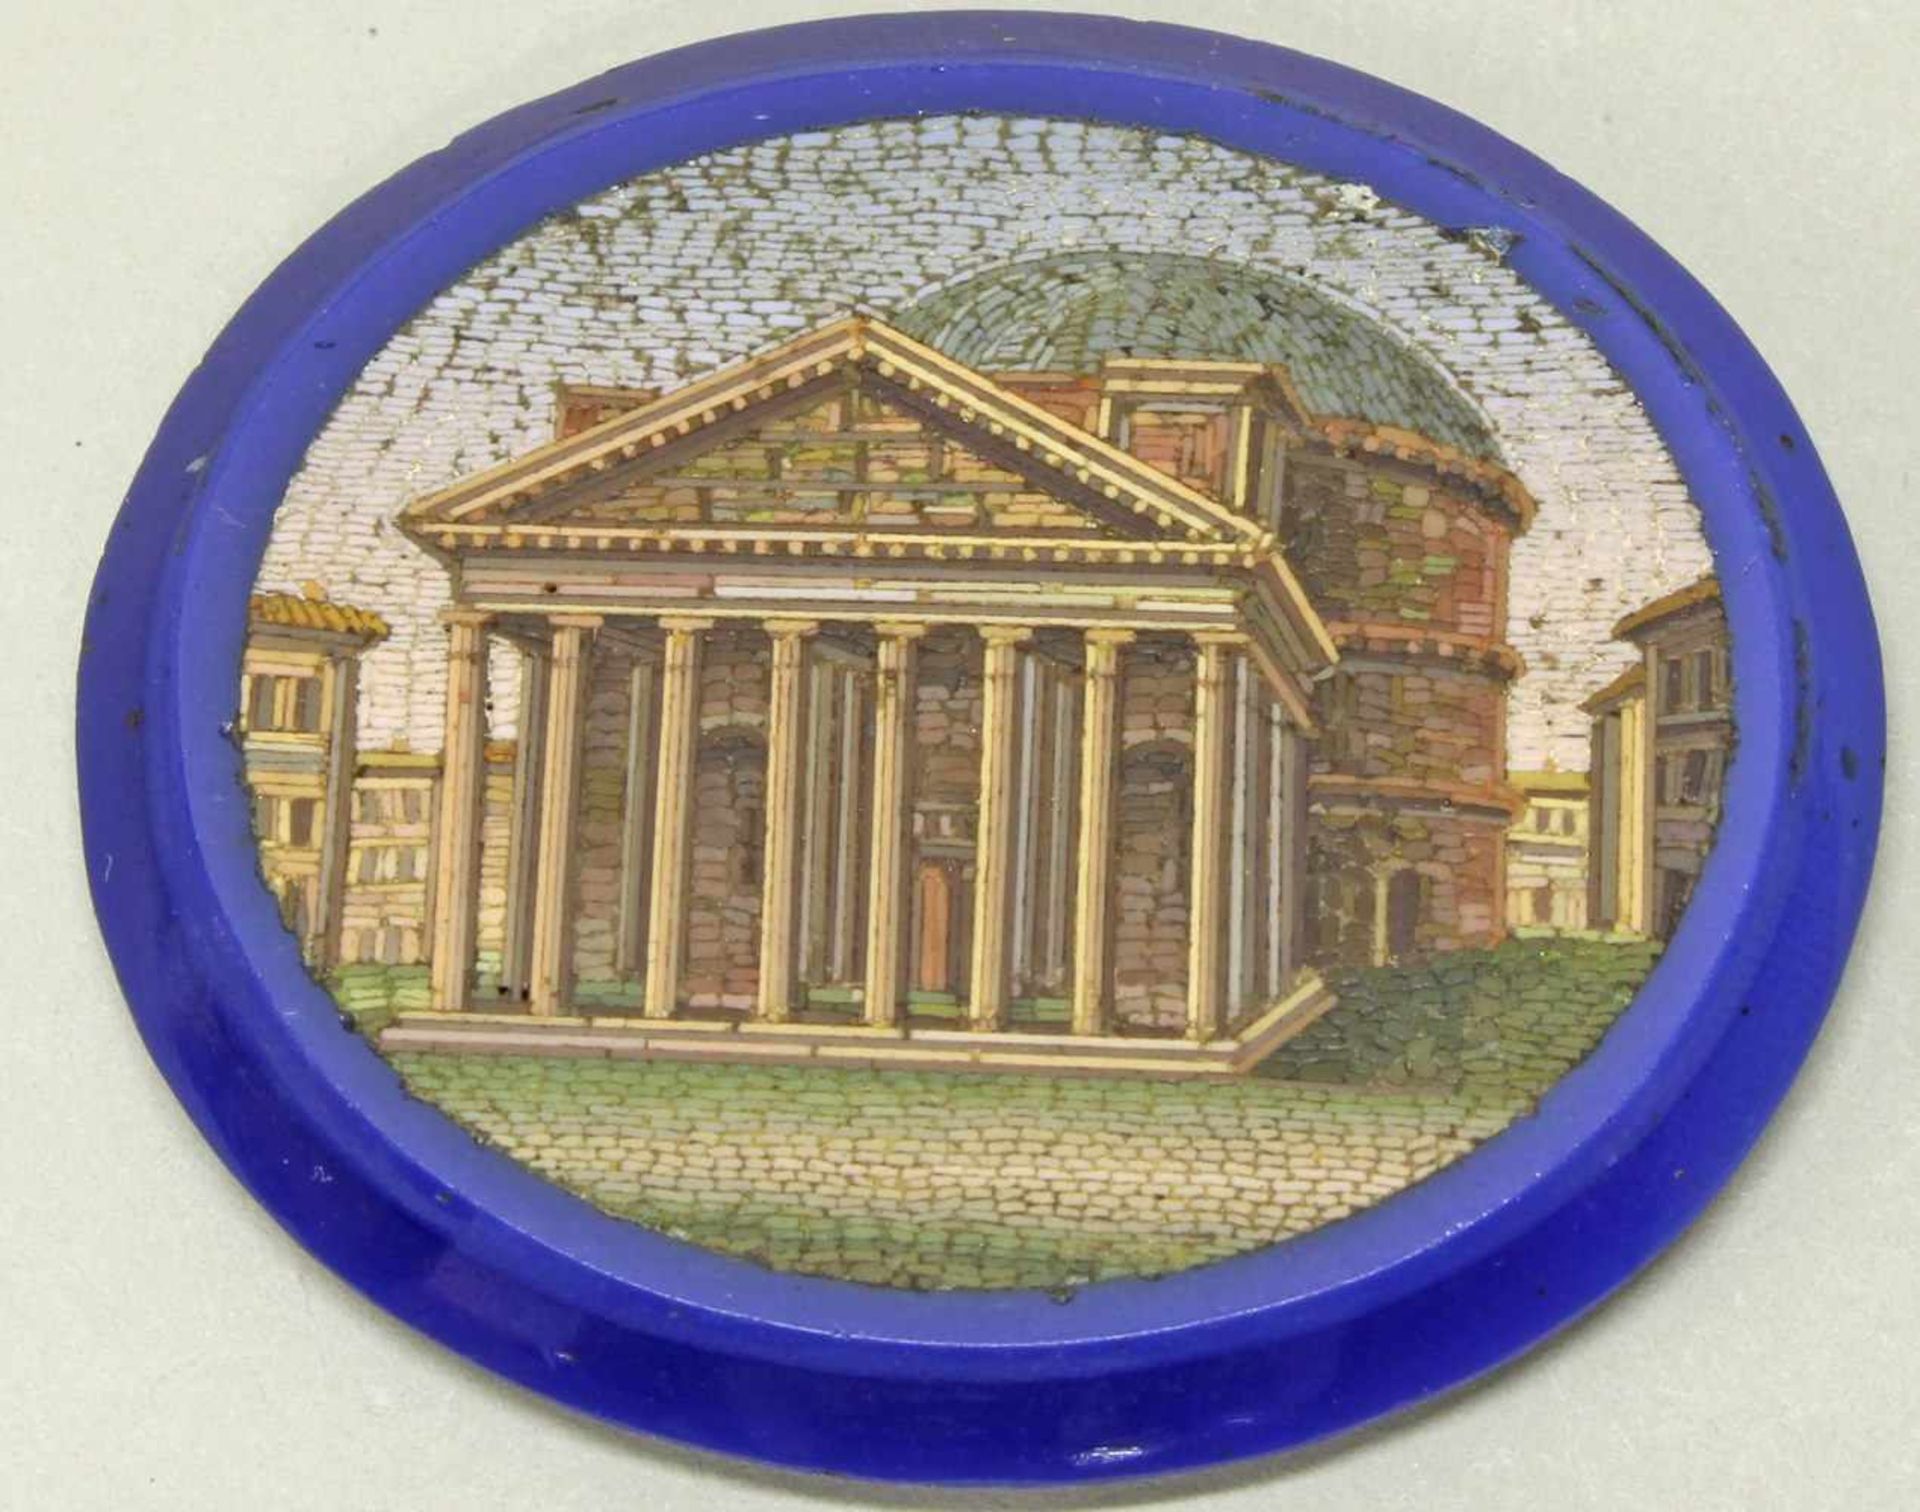 Mikromosaik-Plakette, "Kolosseum und Pantheon", oval, doppelseitig mit Mikromosaiken, blau - Image 2 of 2